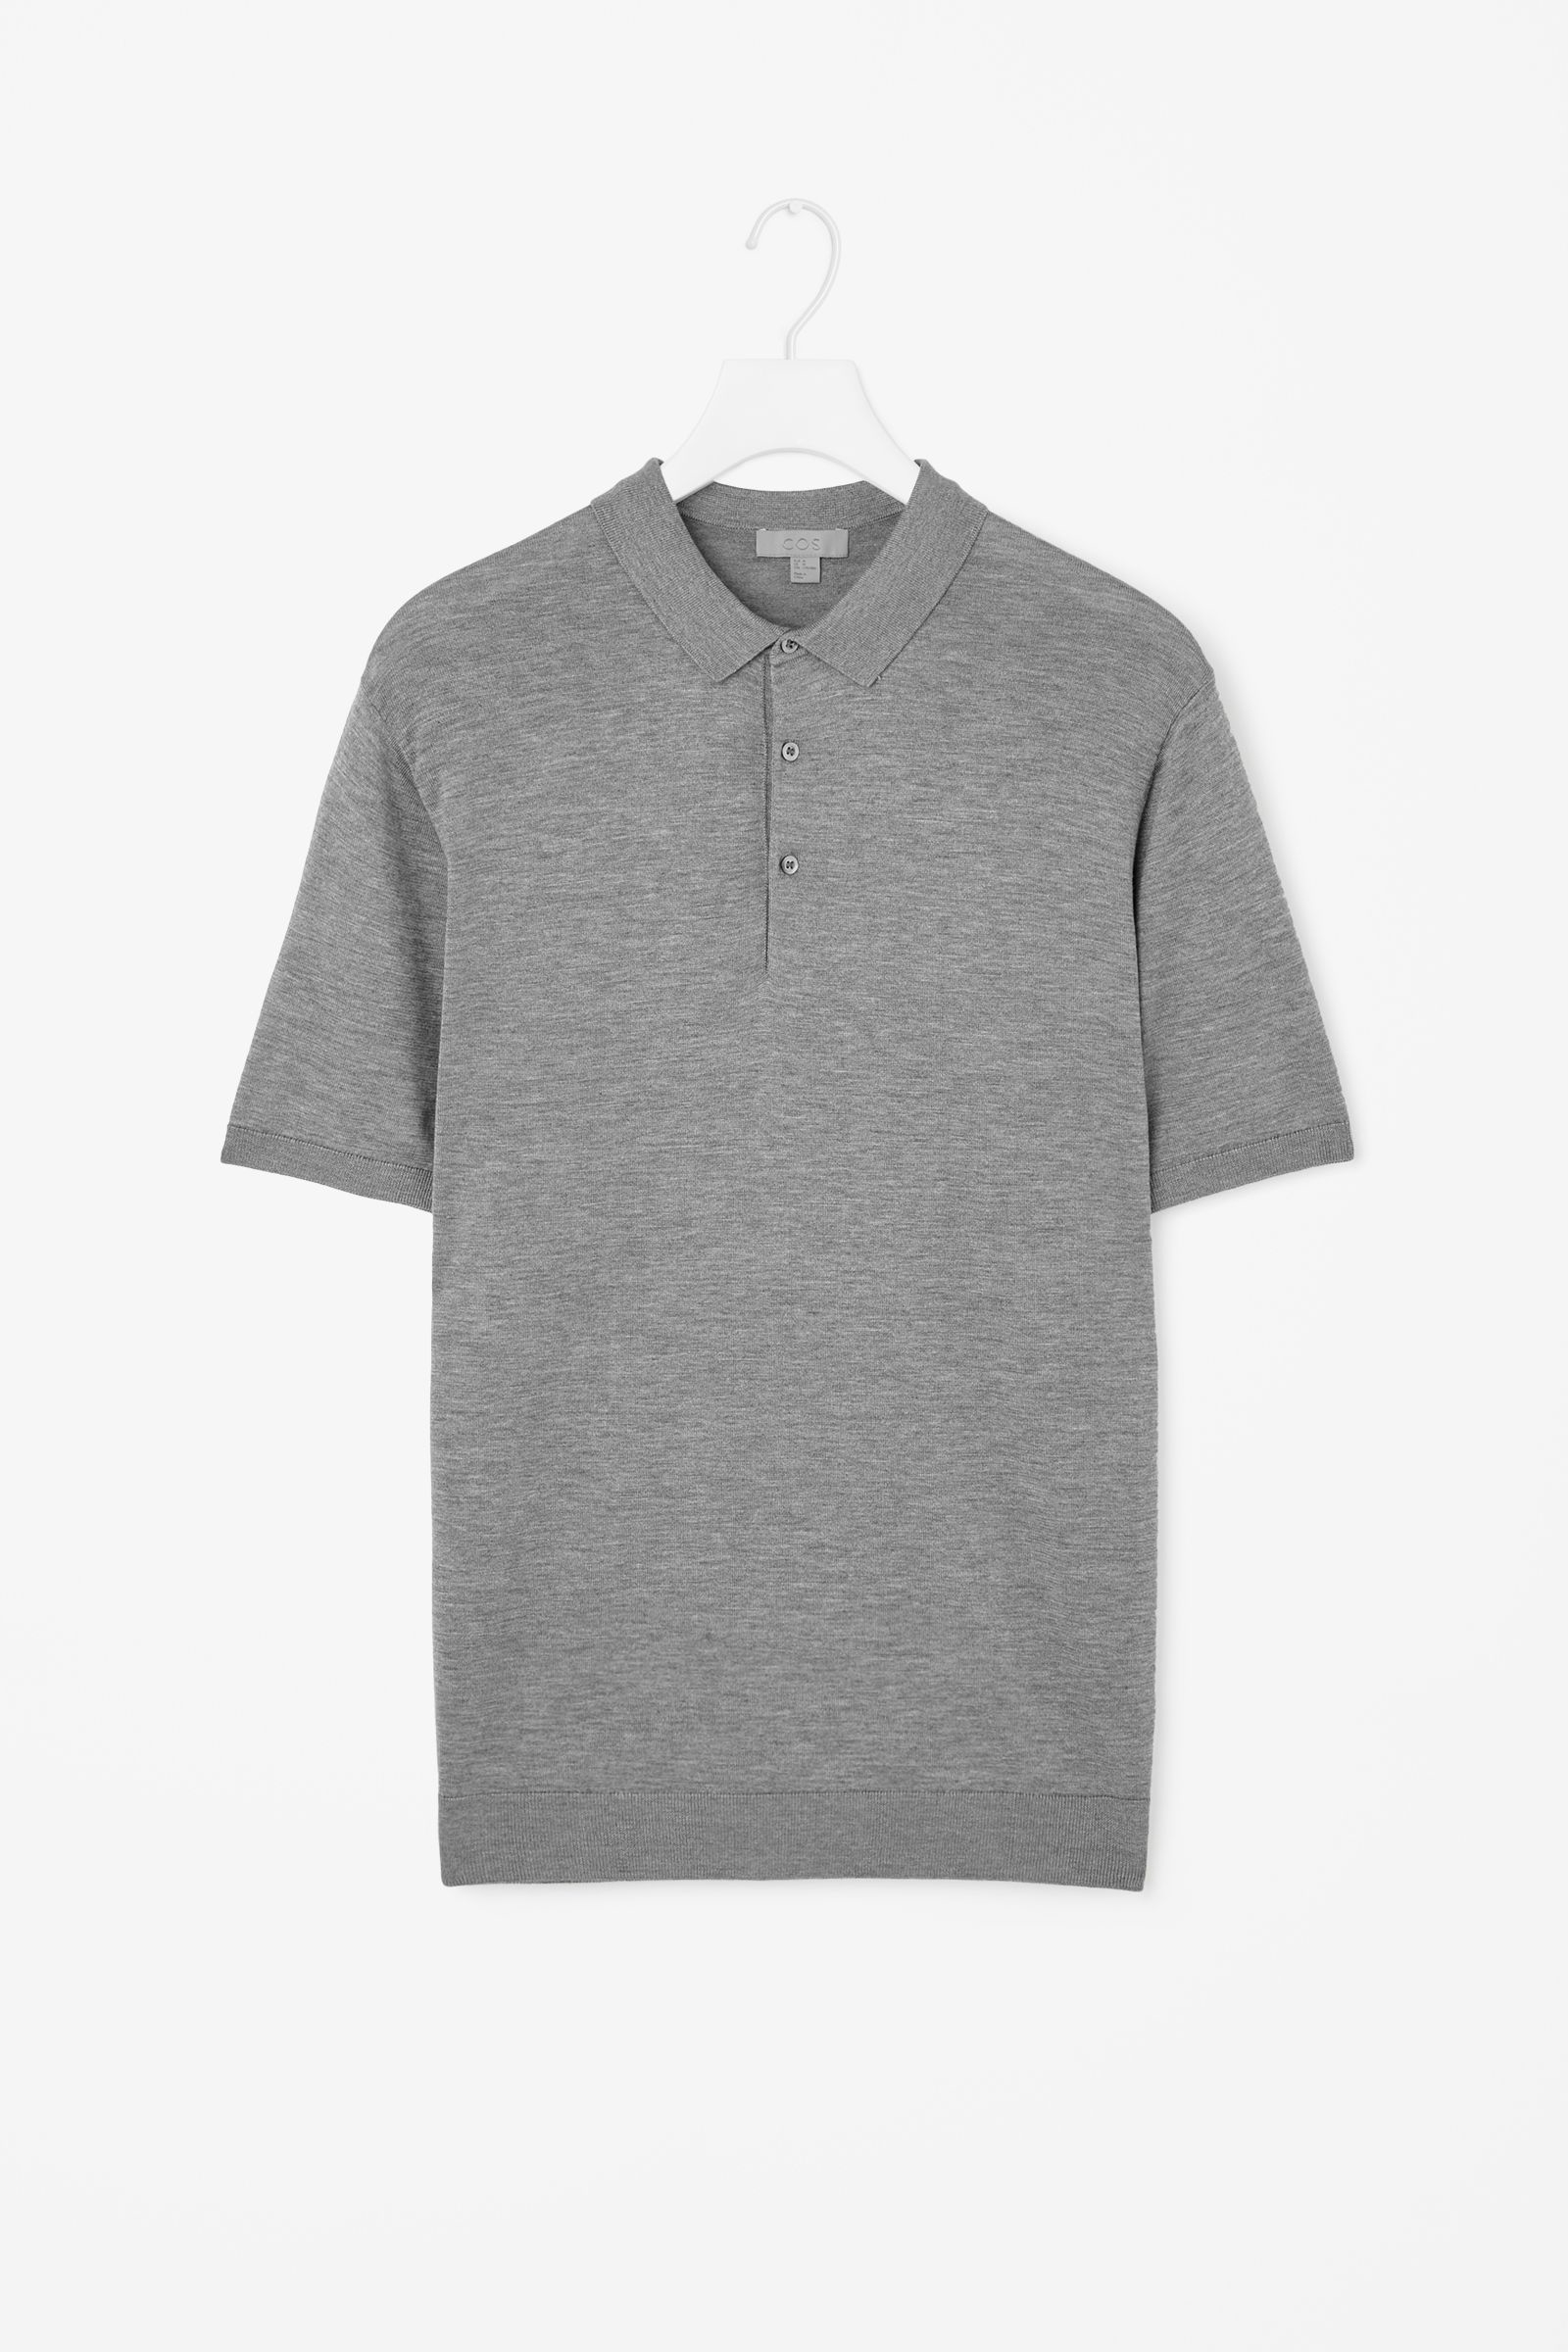 Cos Silk Cotton Polo Shirt in Gray for Men (Light Grey) | Lyst